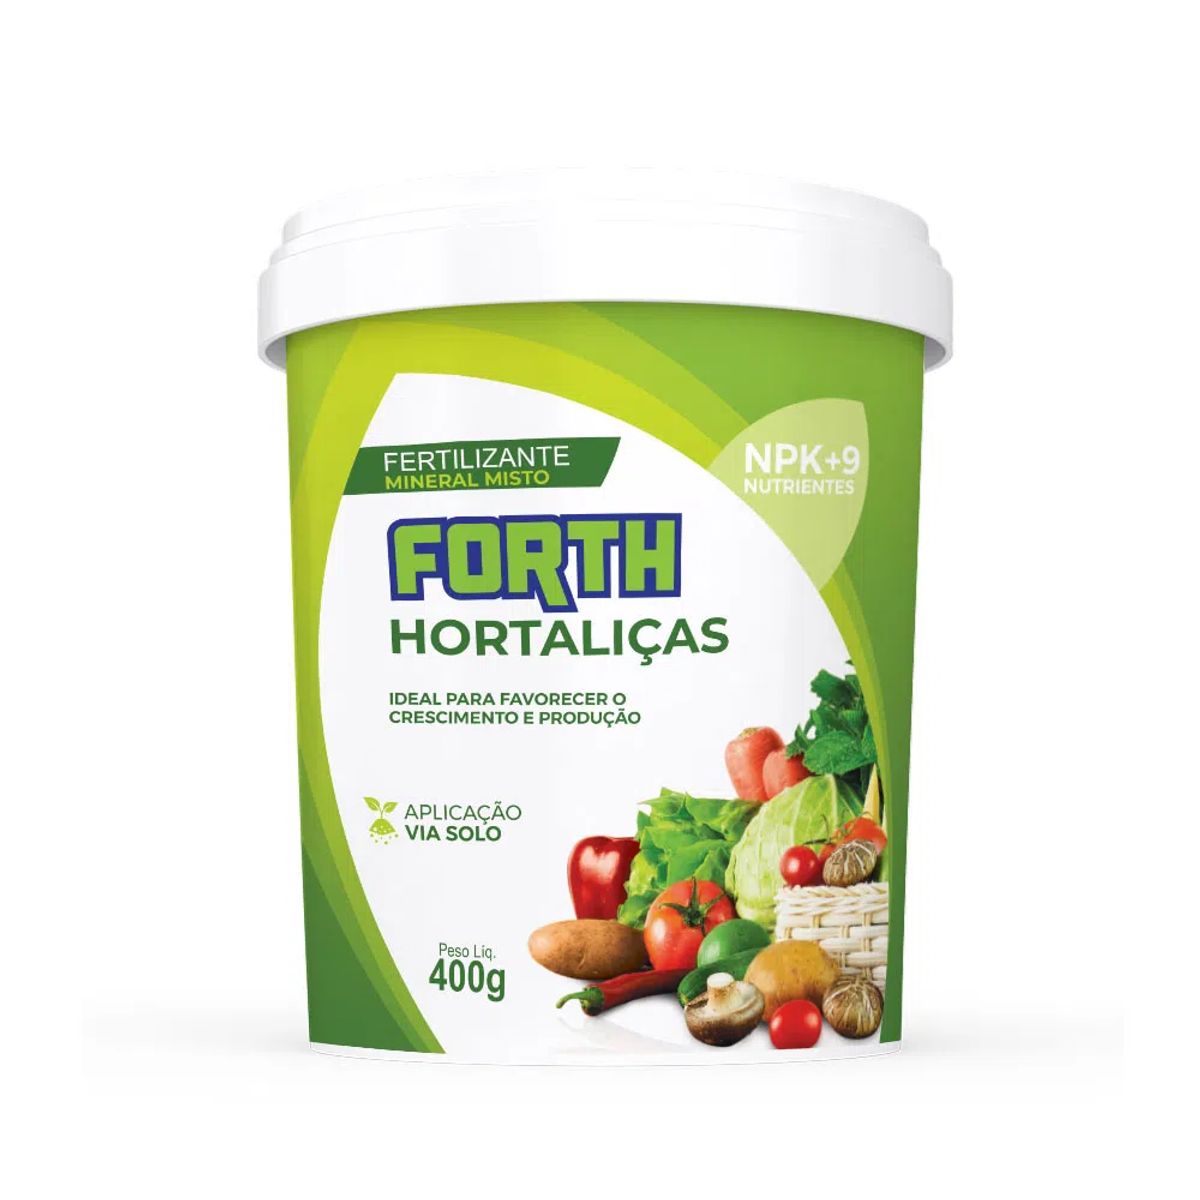 Fertilizante Mineral Forth Hortaliças NPK+ 9 Nutrientes 400g